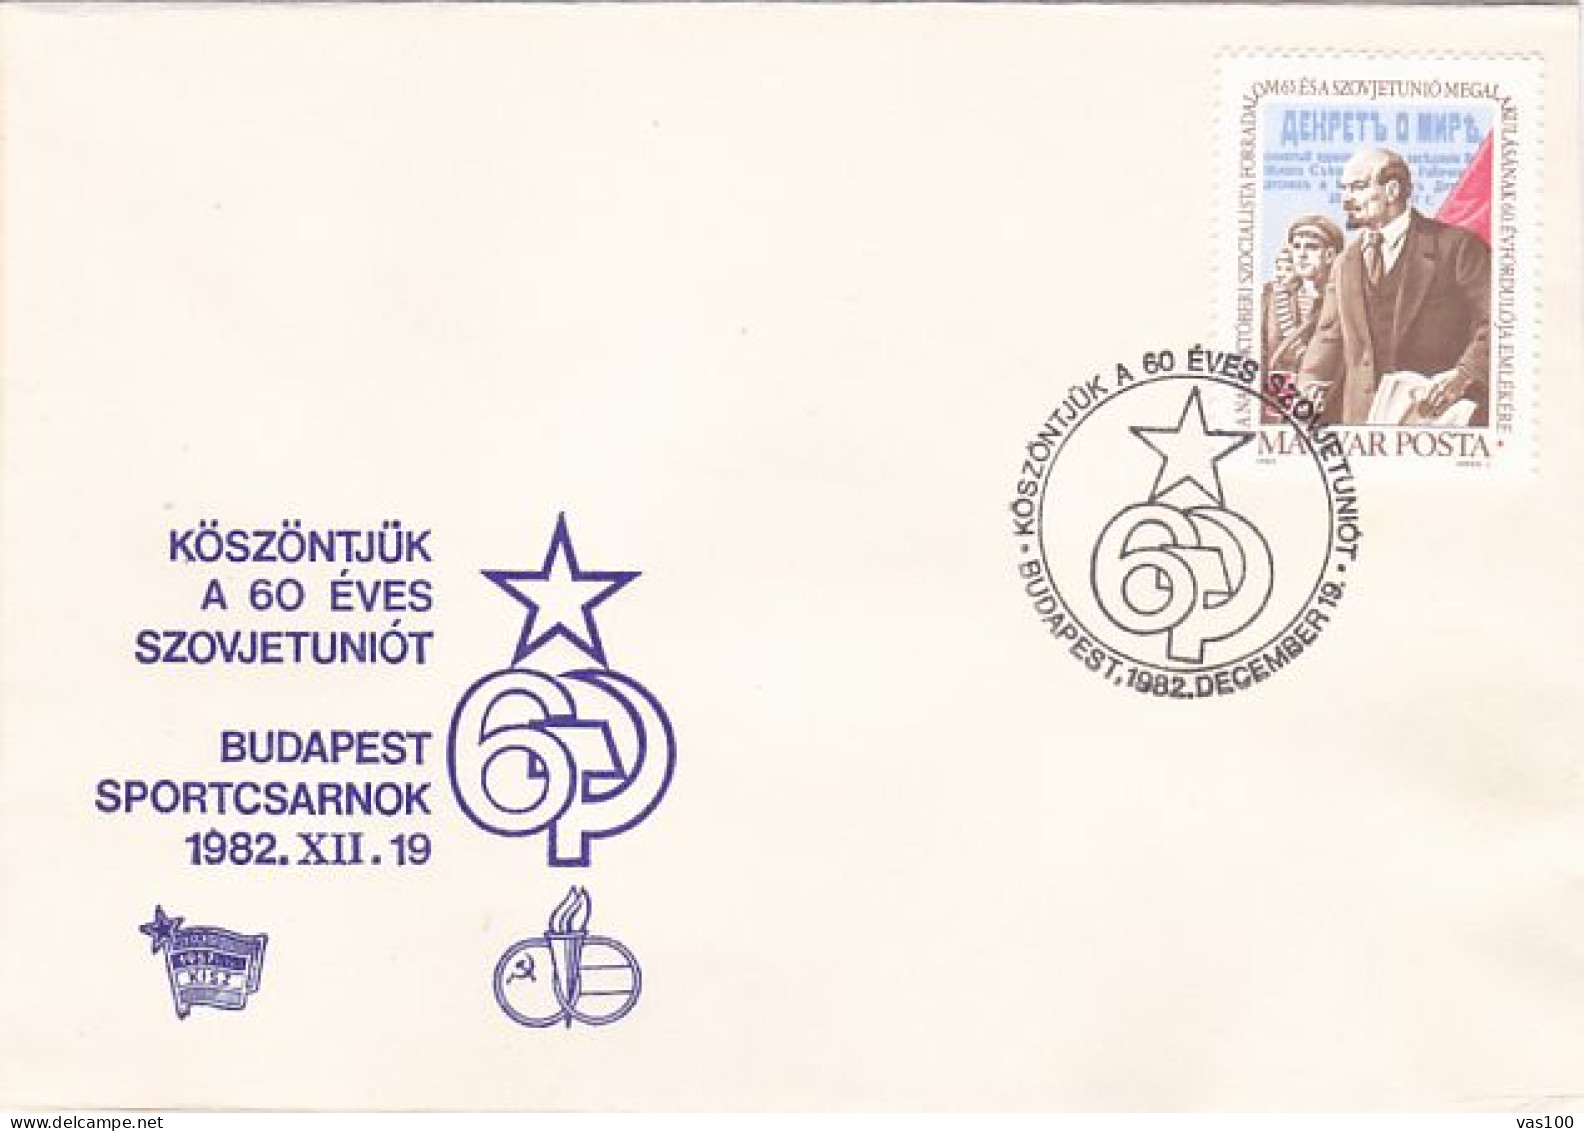 SOVIET UNION ANNIVERSARY, BUDAPEST PHILATELIC EXHIBITION, SPECIAL COVER, 1982, HUNGARY - Briefe U. Dokumente